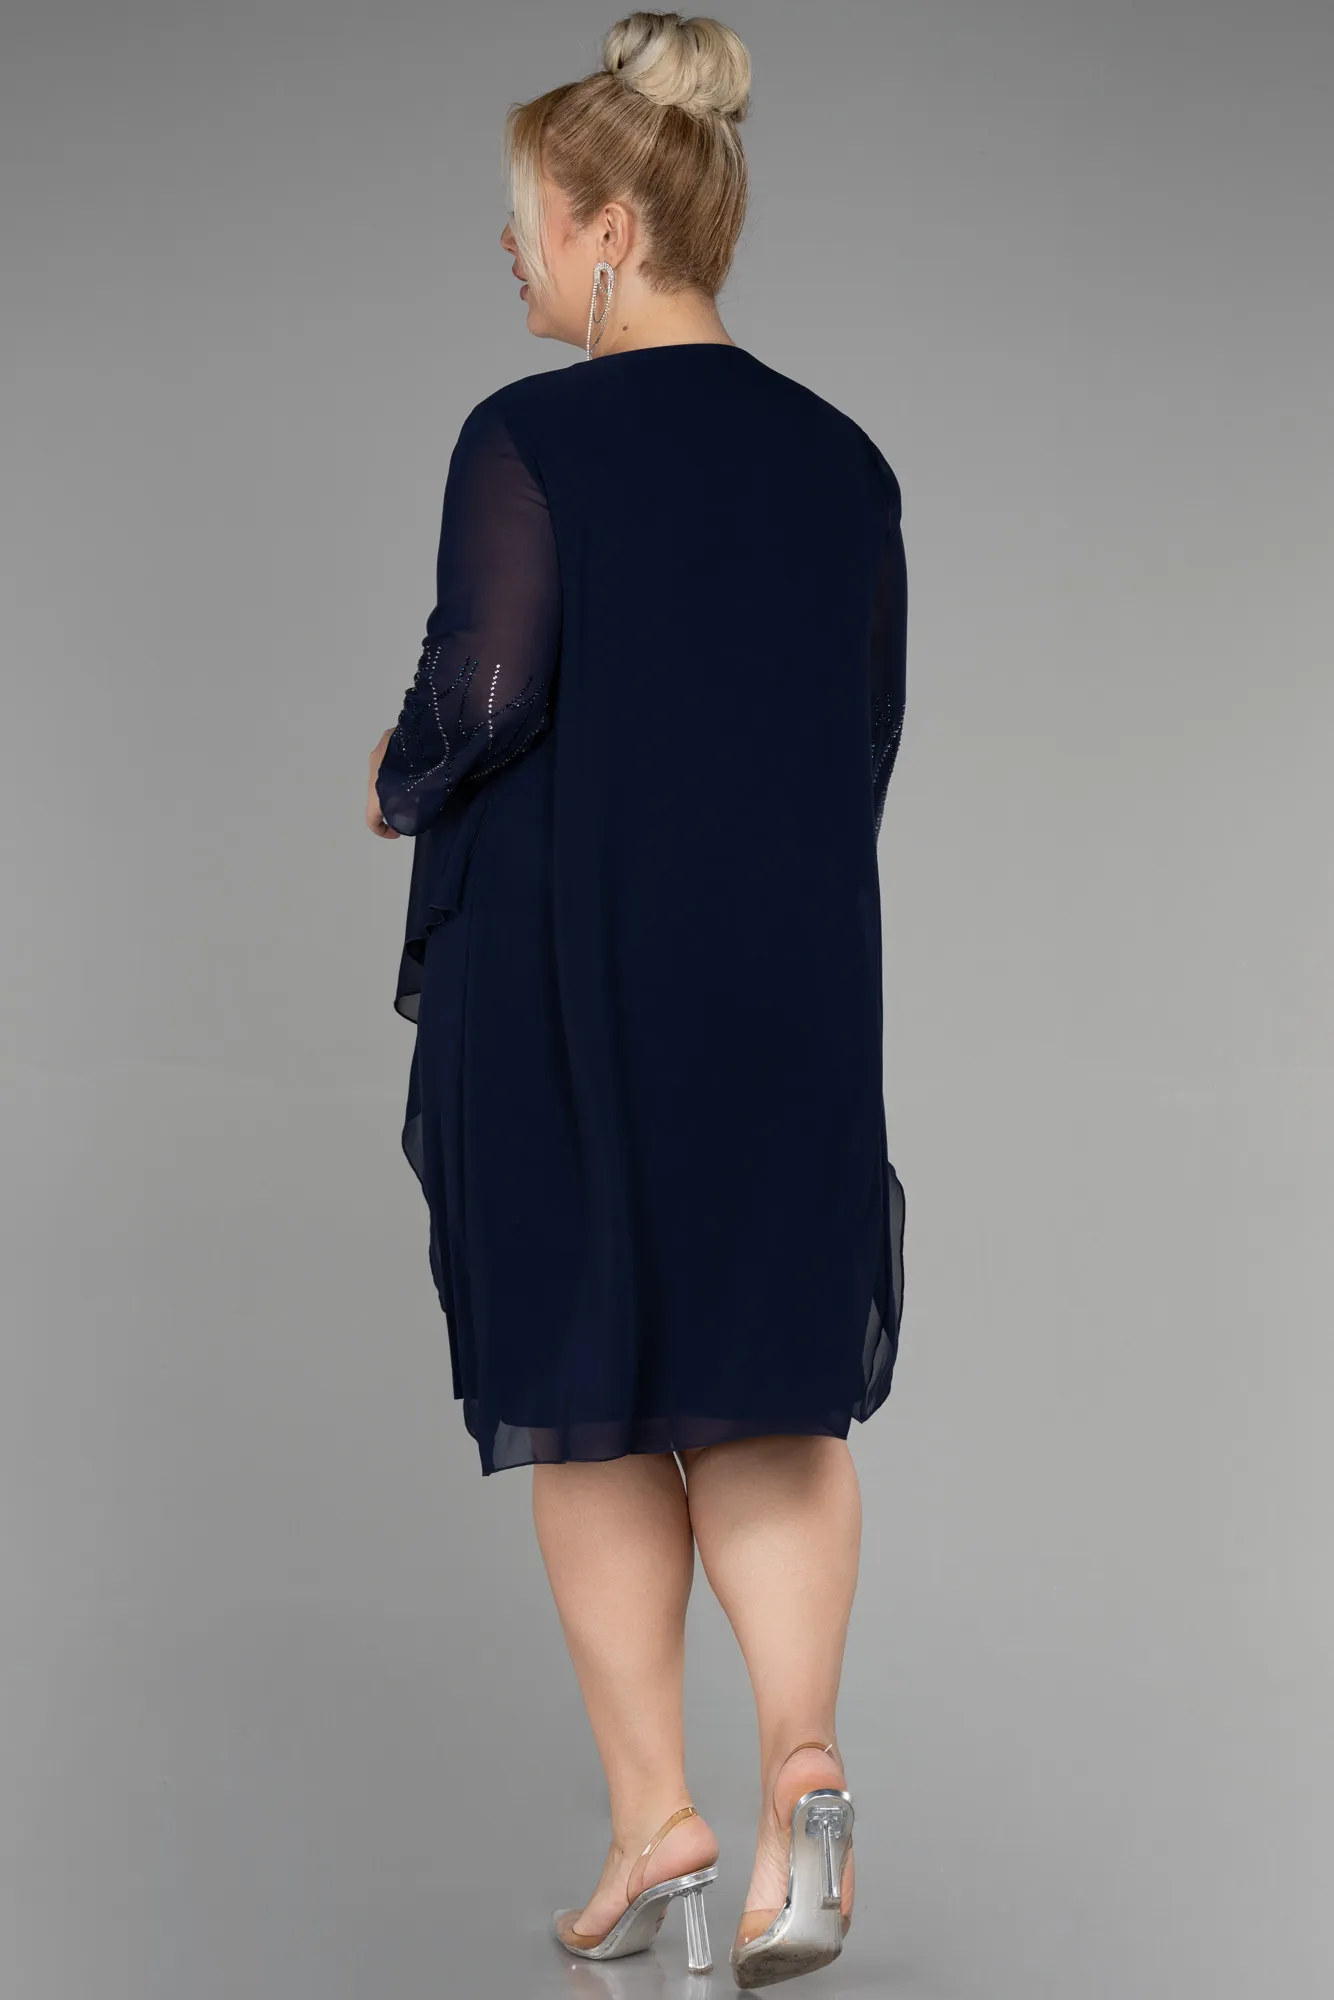 Navy Blue-Short Chiffon Plus Size Evening Dress ABK1290